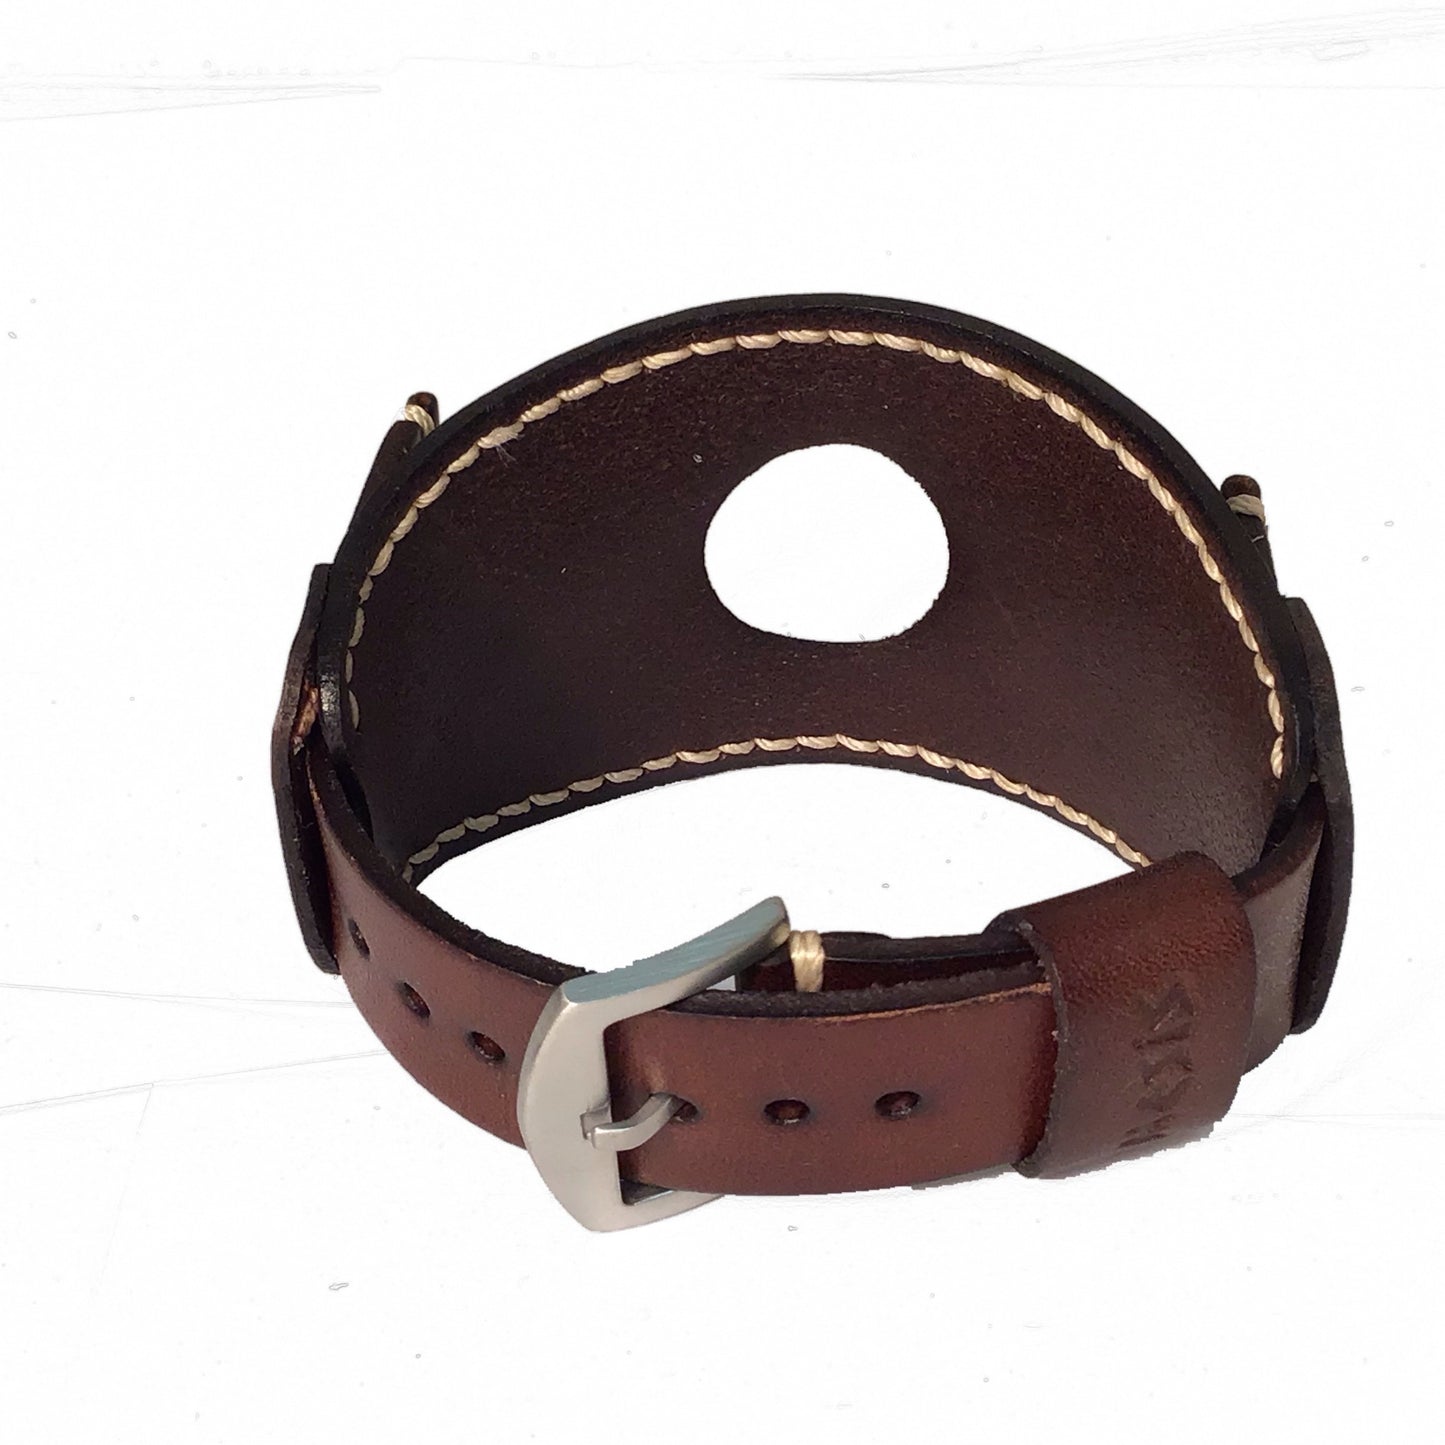 Smart Watch White Stitched Brown Leather Cuff